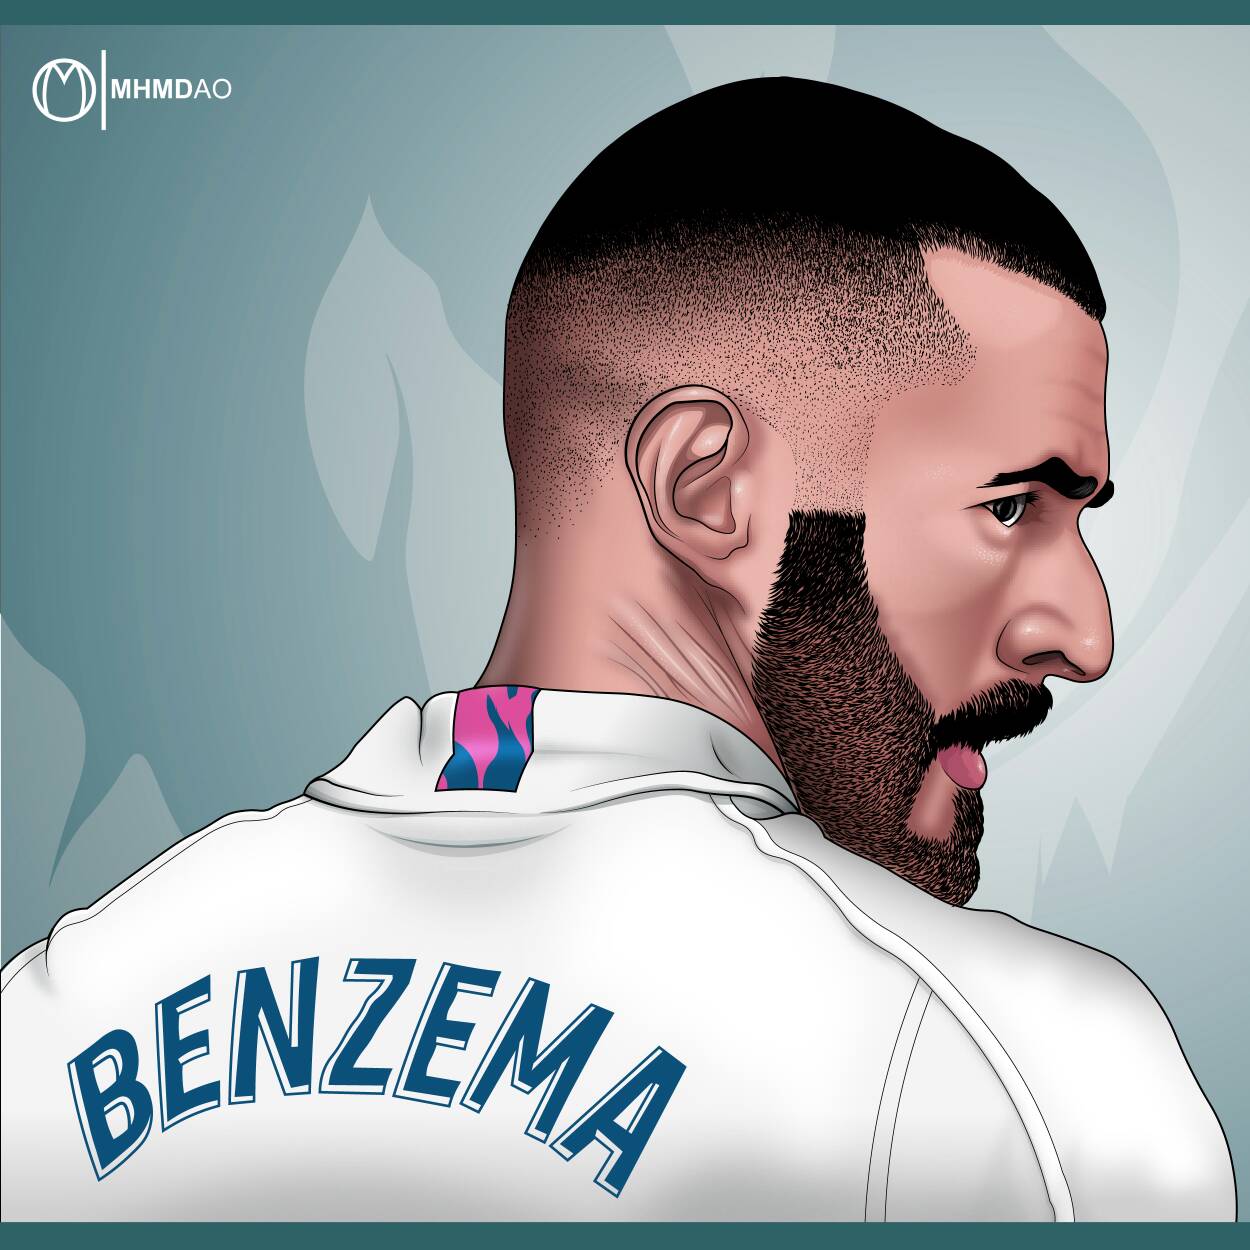 Karim Benzema Real Madrid Living Legend 2021 By Mhmdao On Deviantart